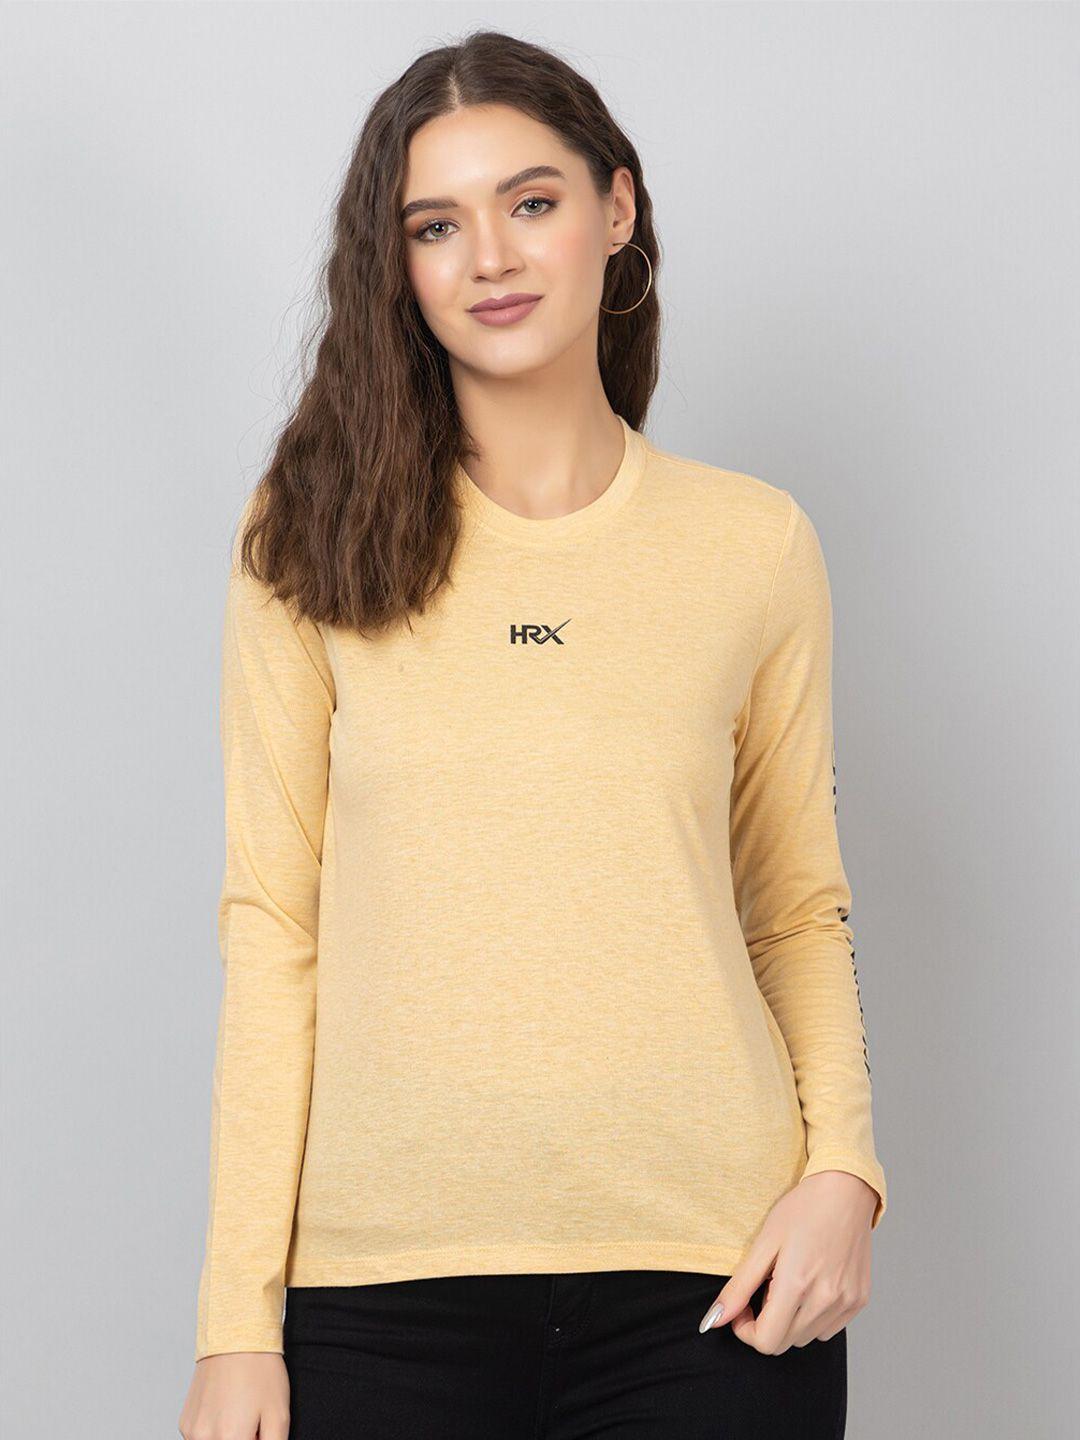 hrx-by-hrithik-roshan-women-typography-printed-round-neck-t-shirt